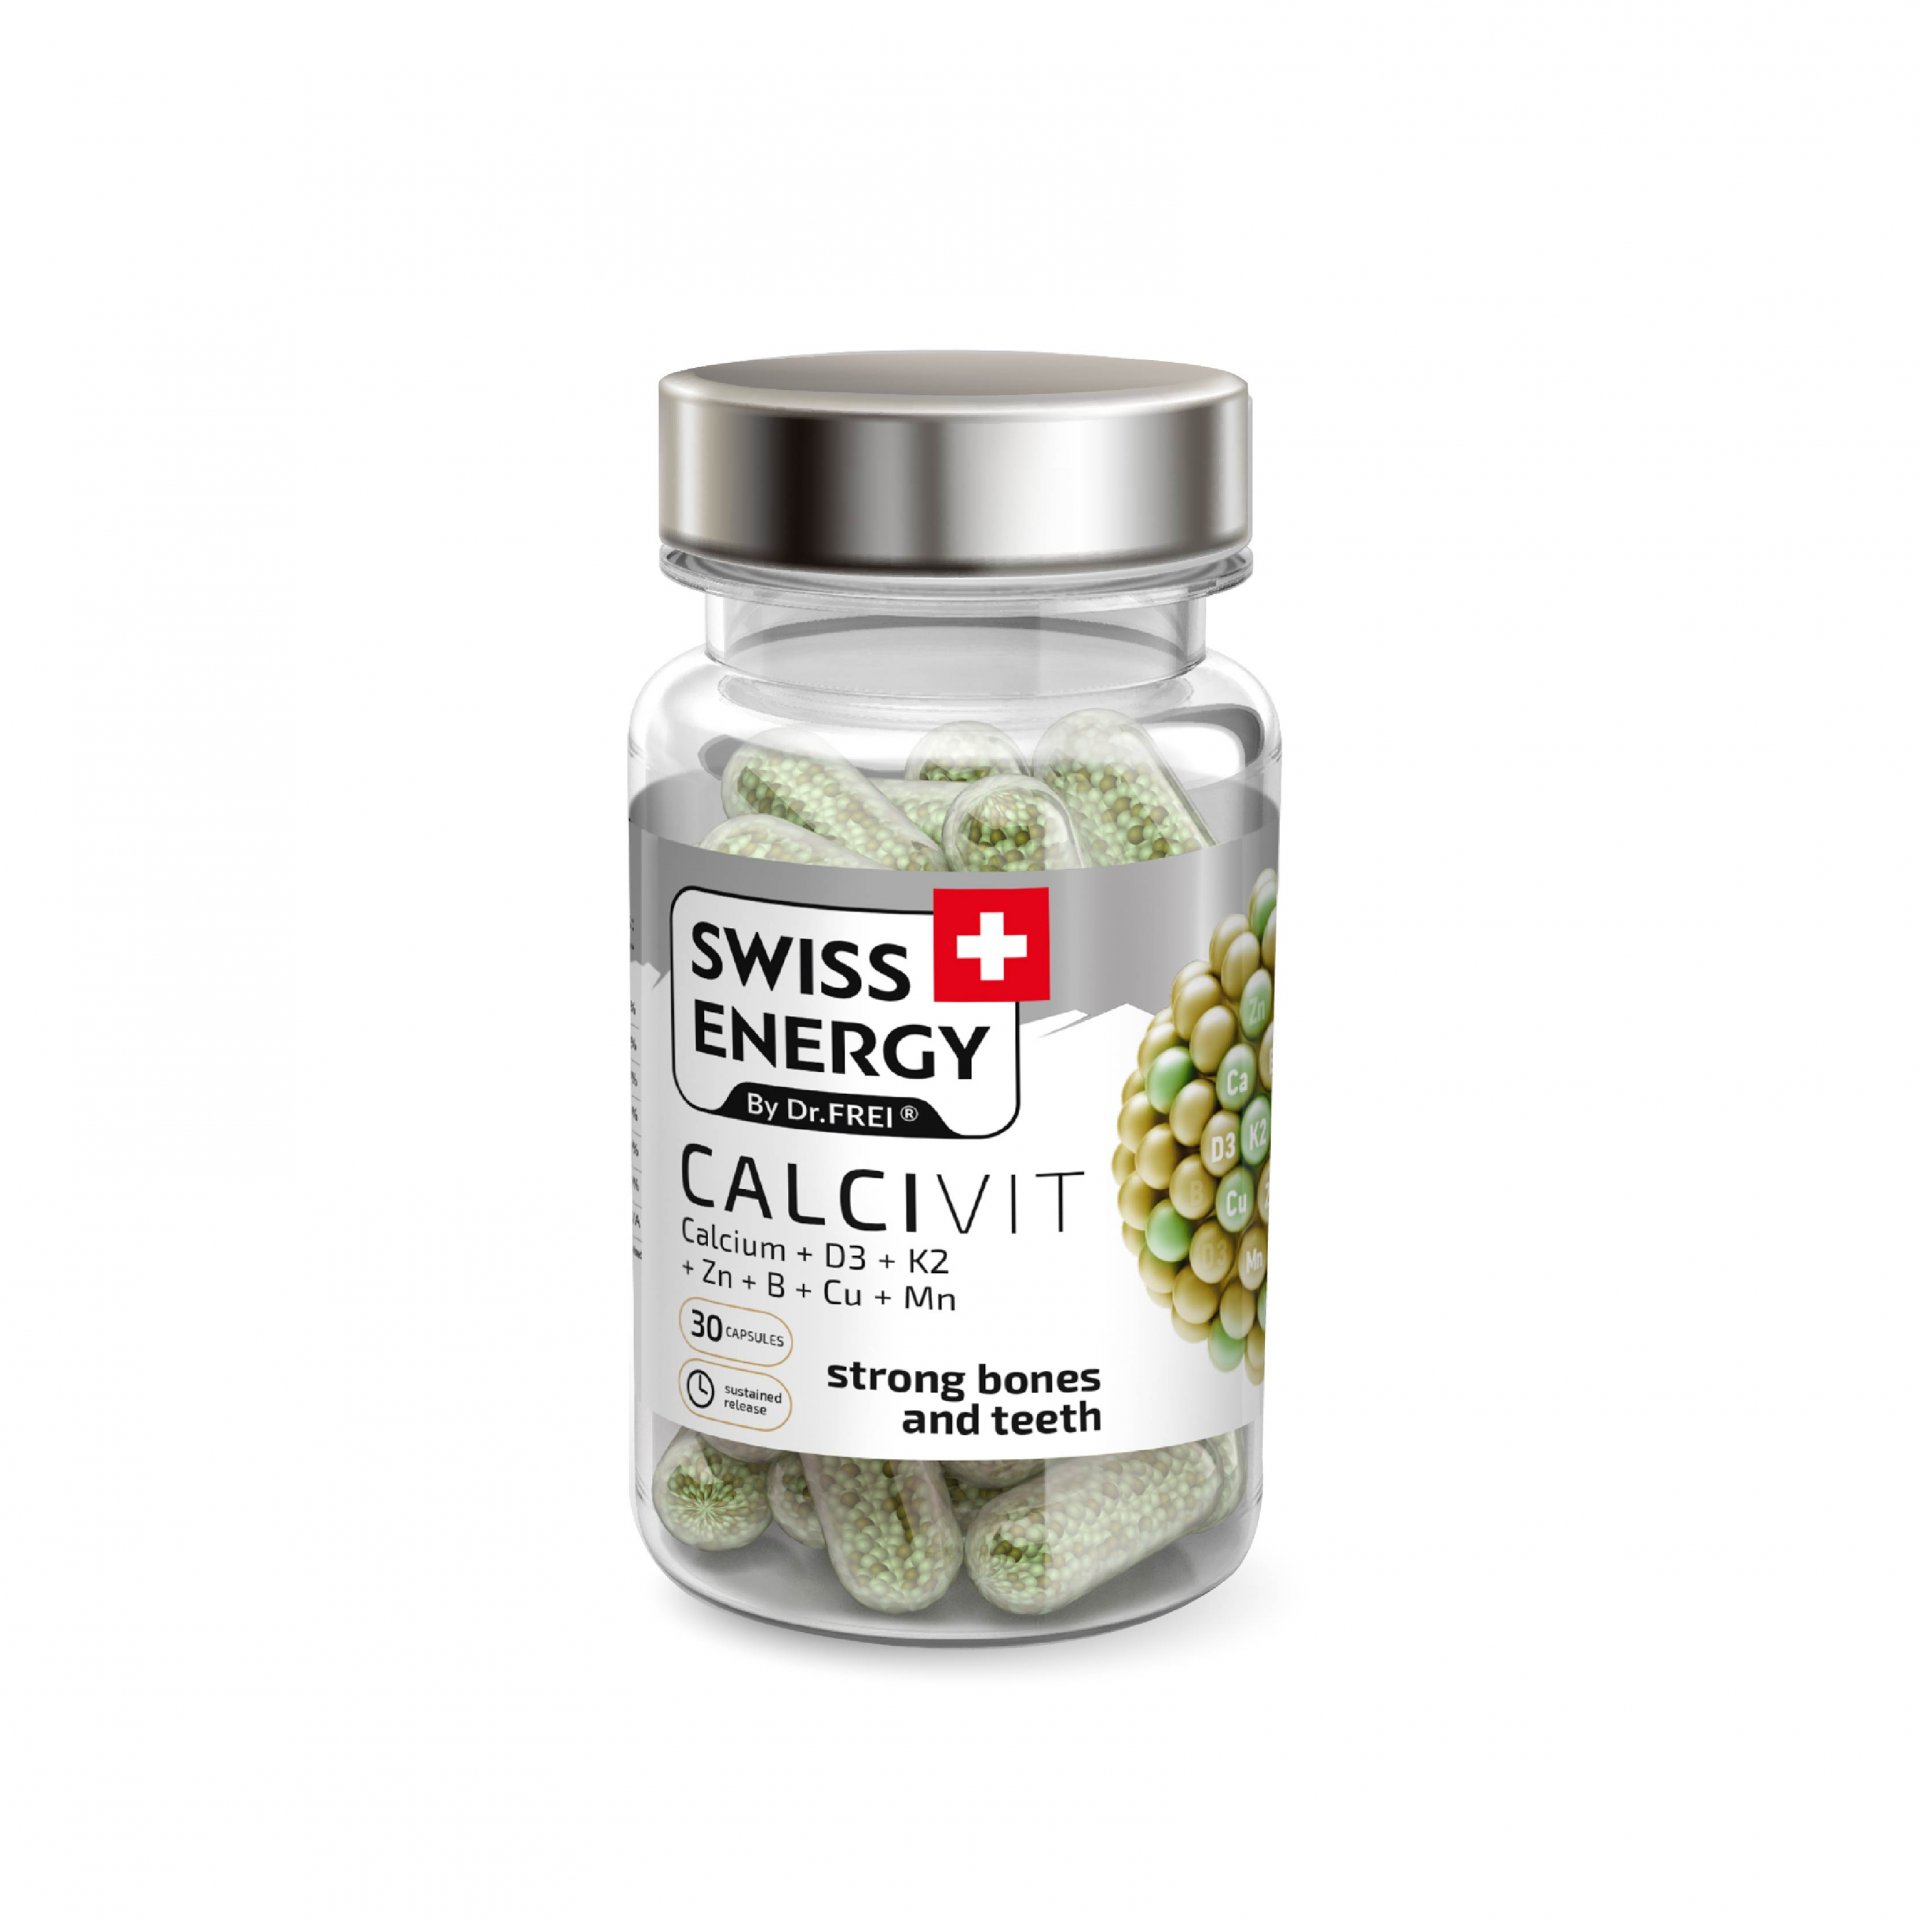 Swiss Energy Calcivit Calcium Plus Vitamin D3, Vitamin K2, Zinc, Copper and Manganese